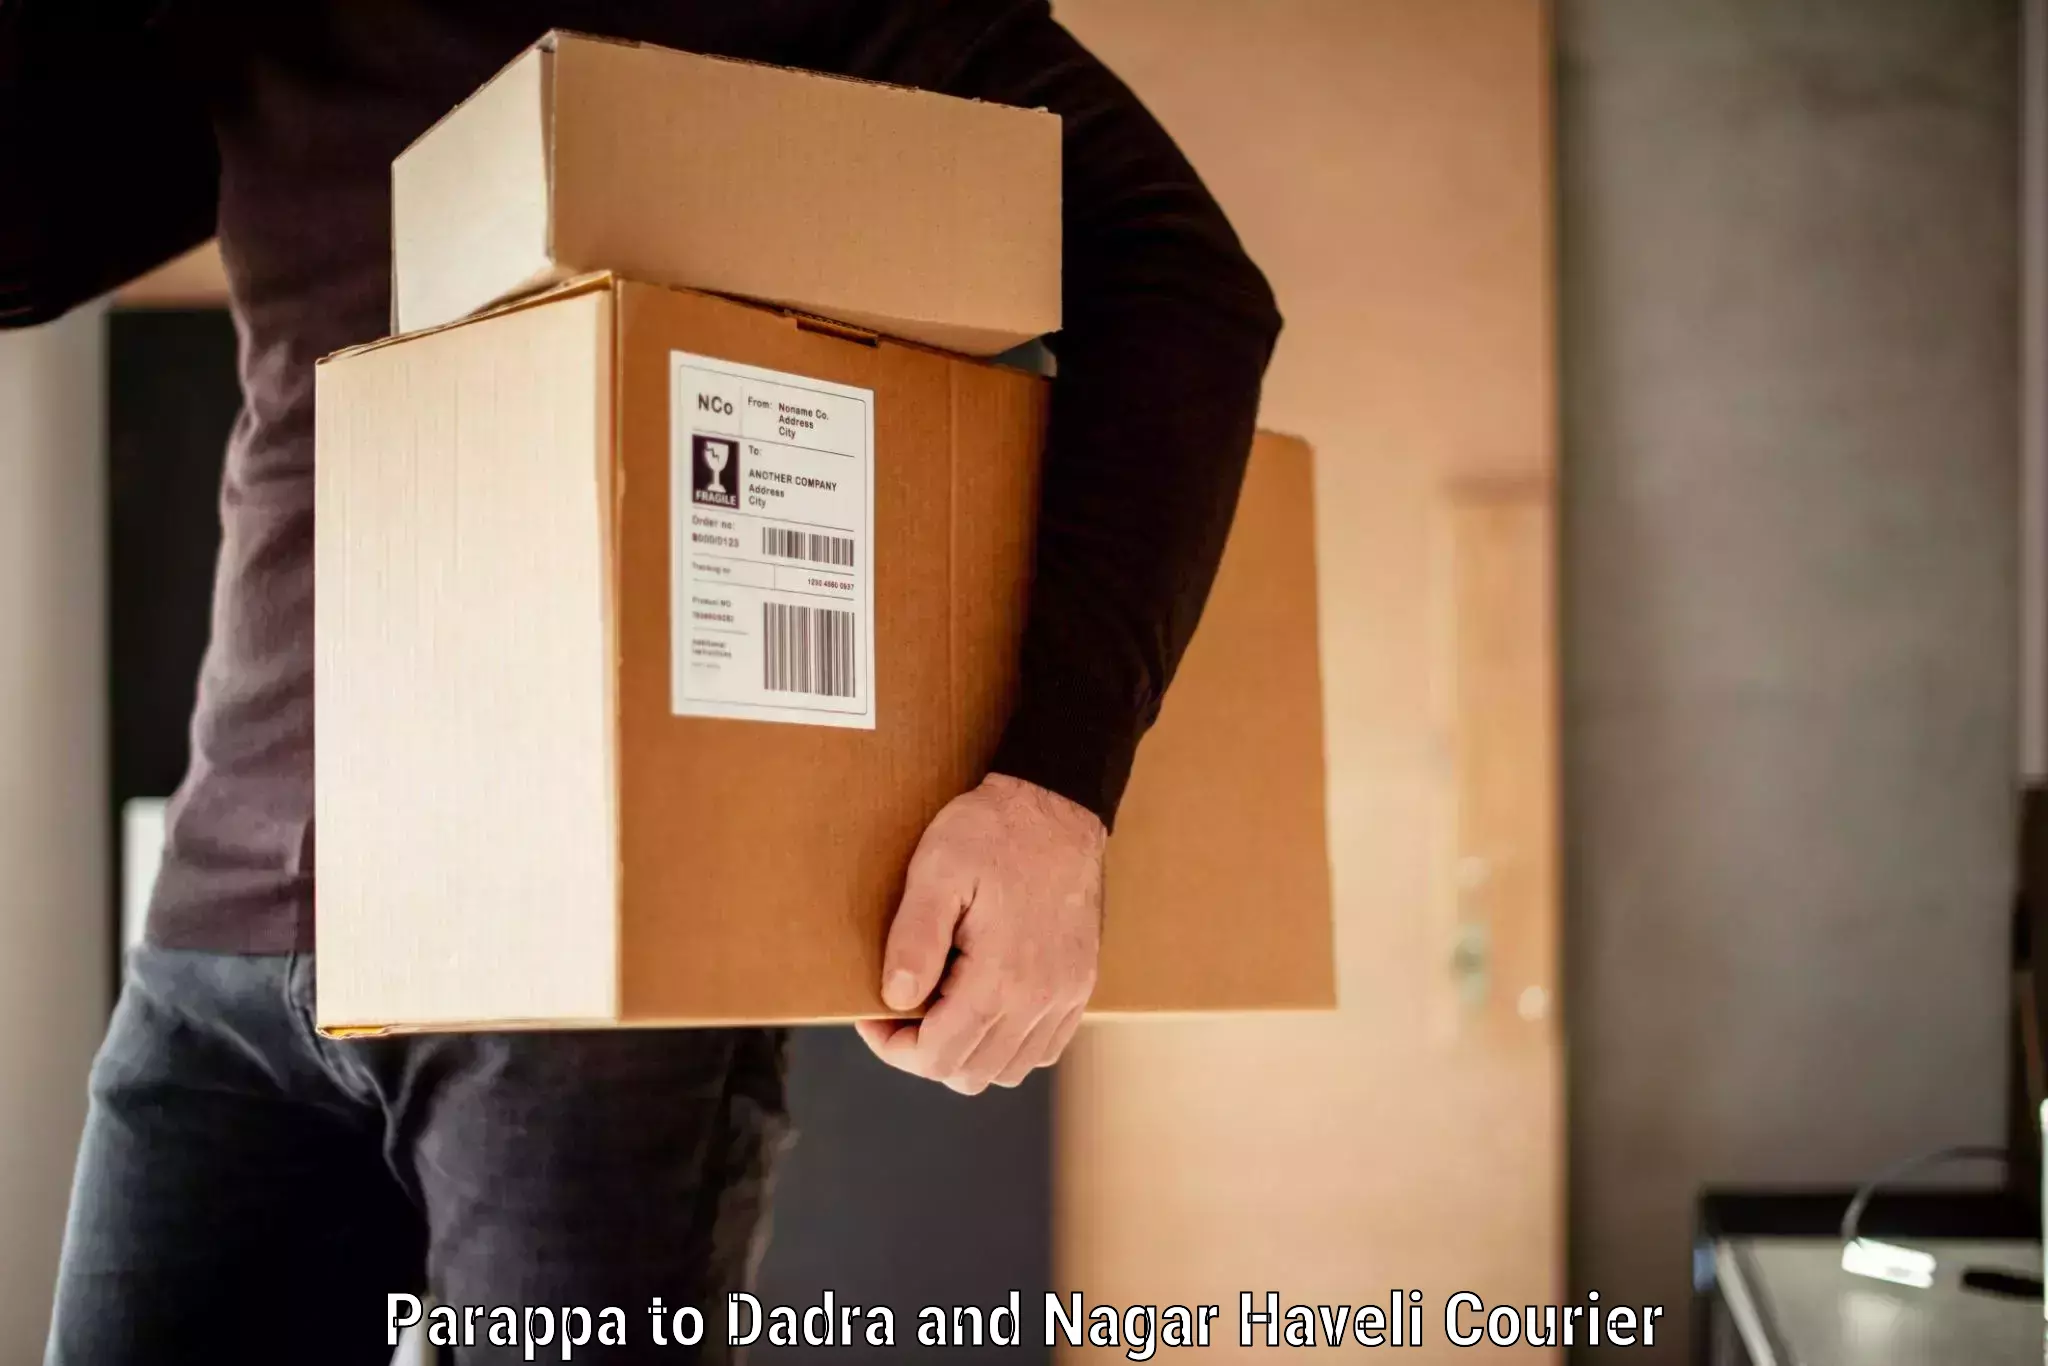 Door-to-door baggage service Parappa to Dadra and Nagar Haveli